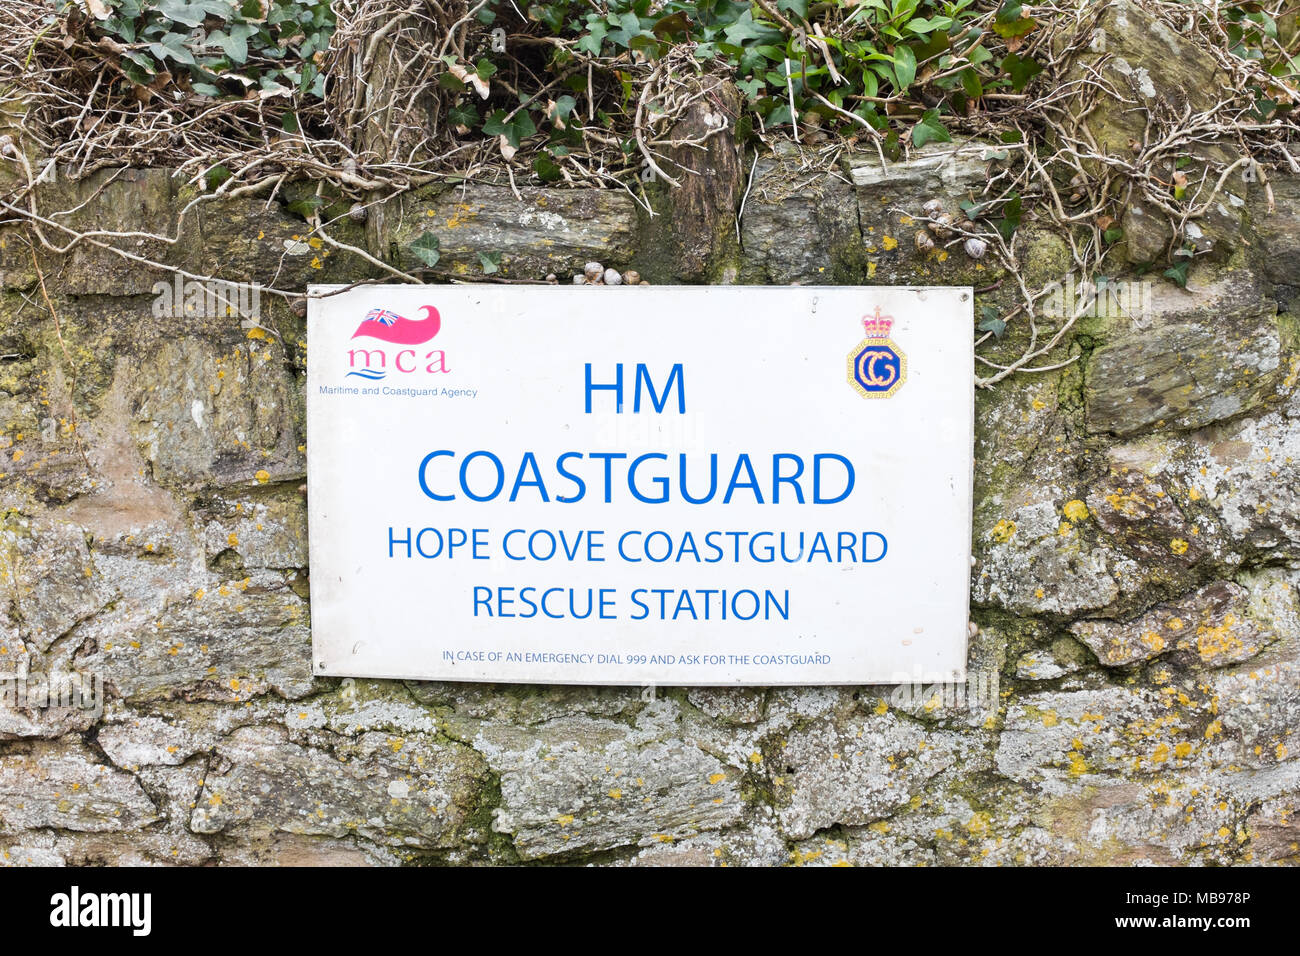 Sign for HM Coastguard at Hope Cove Coastguard Rescue Station in the South Hams, Devon, UK Stock Photo